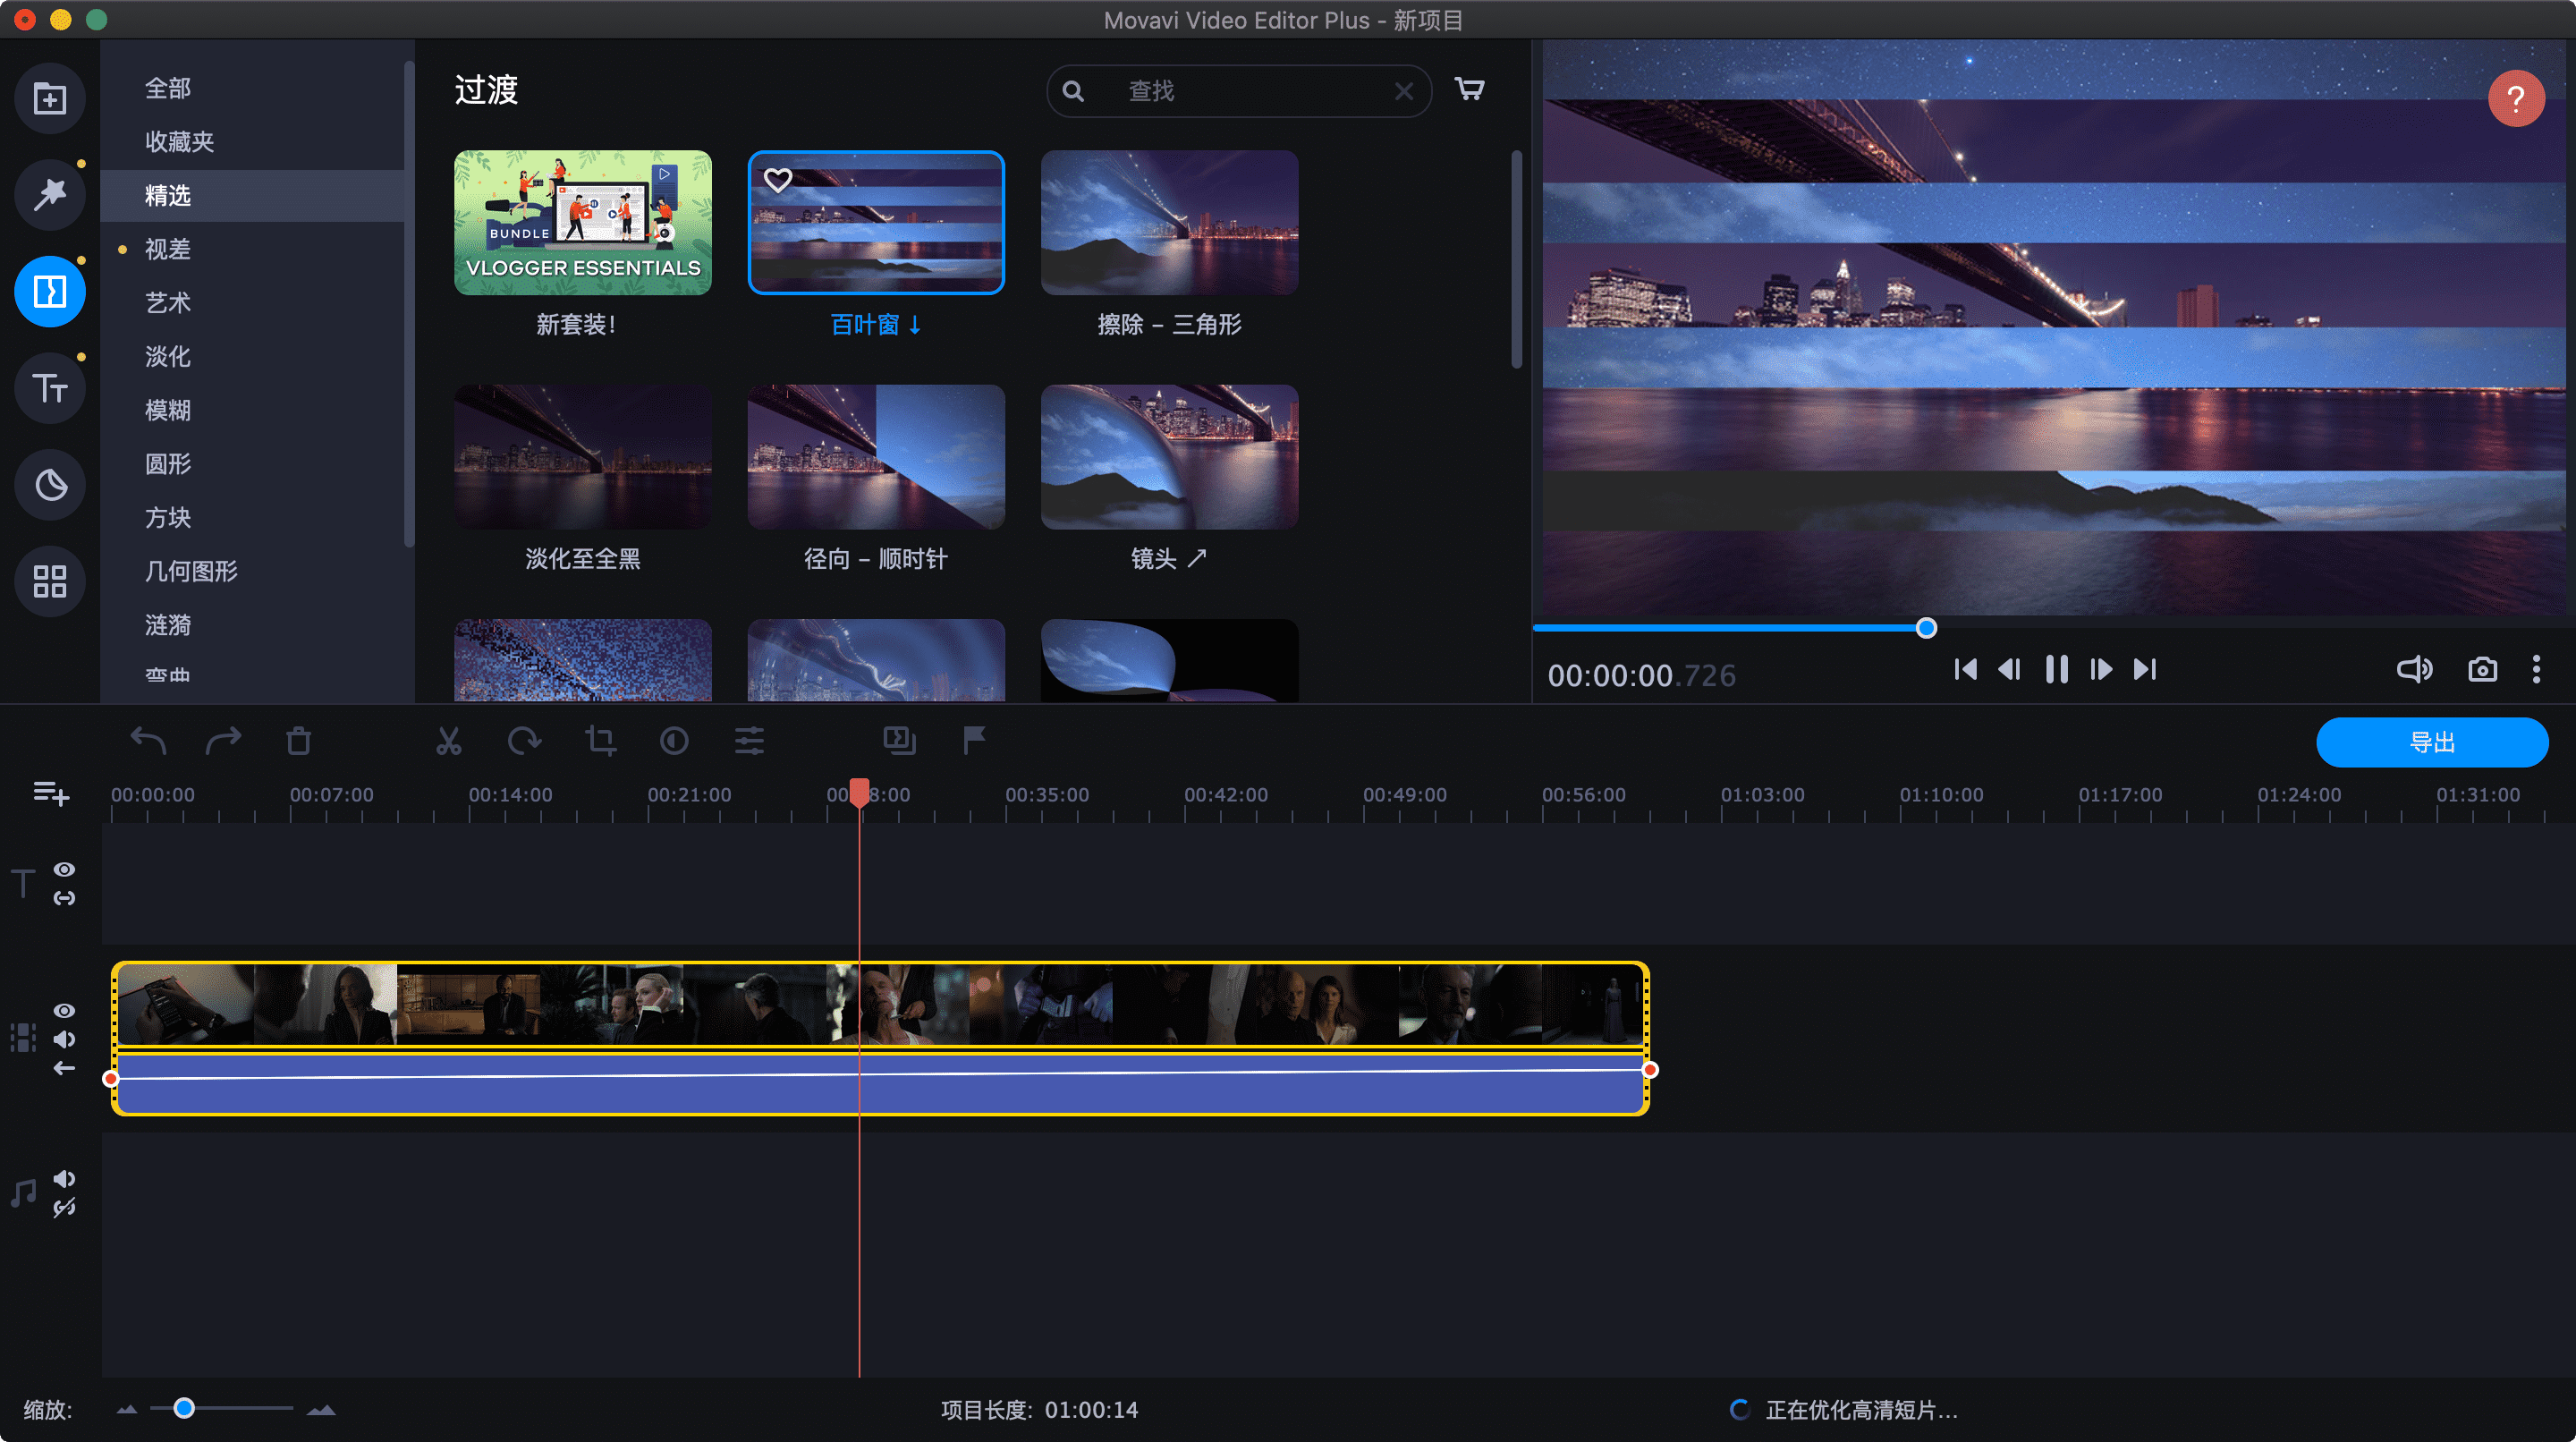 Movavi Video Editor Plus 2021 for mac 内置了超多过渡效果